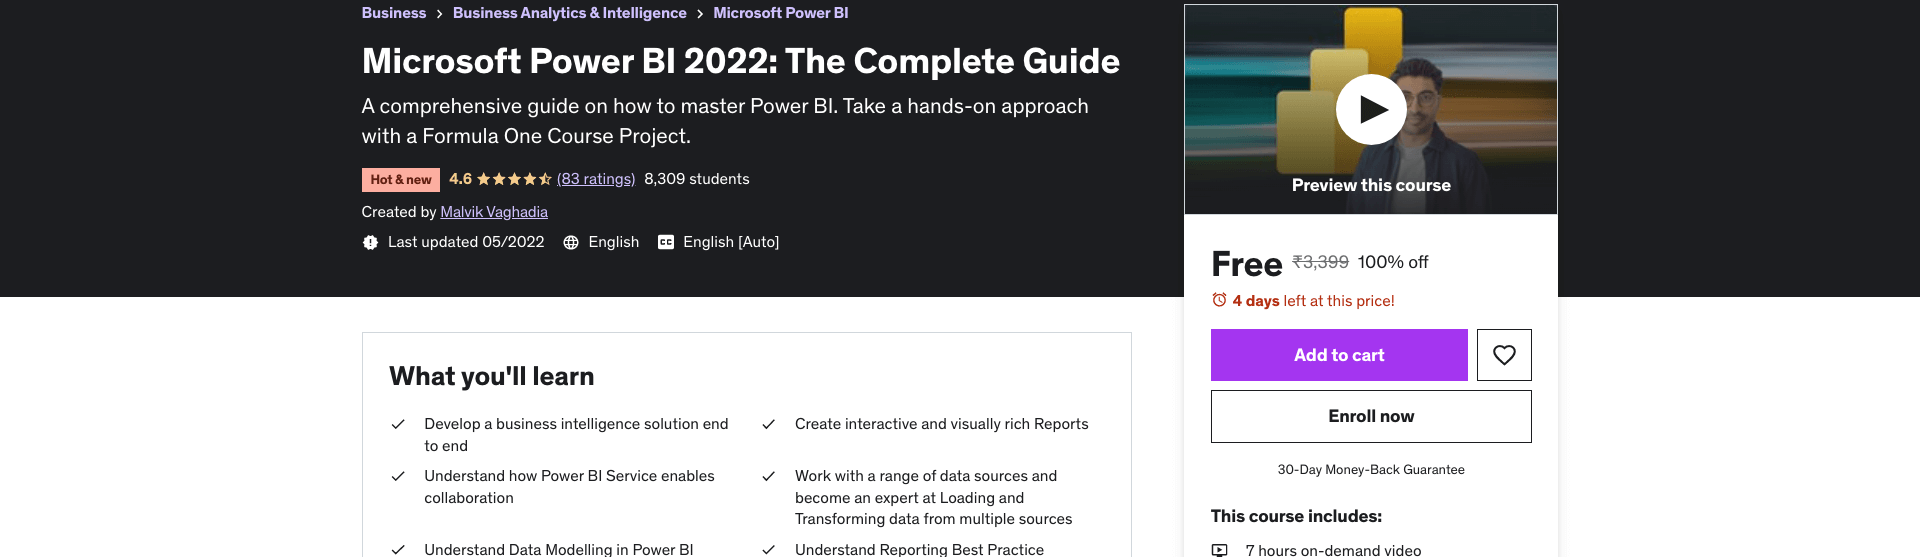 Microsoft Power BI 2022: The Complete Guide